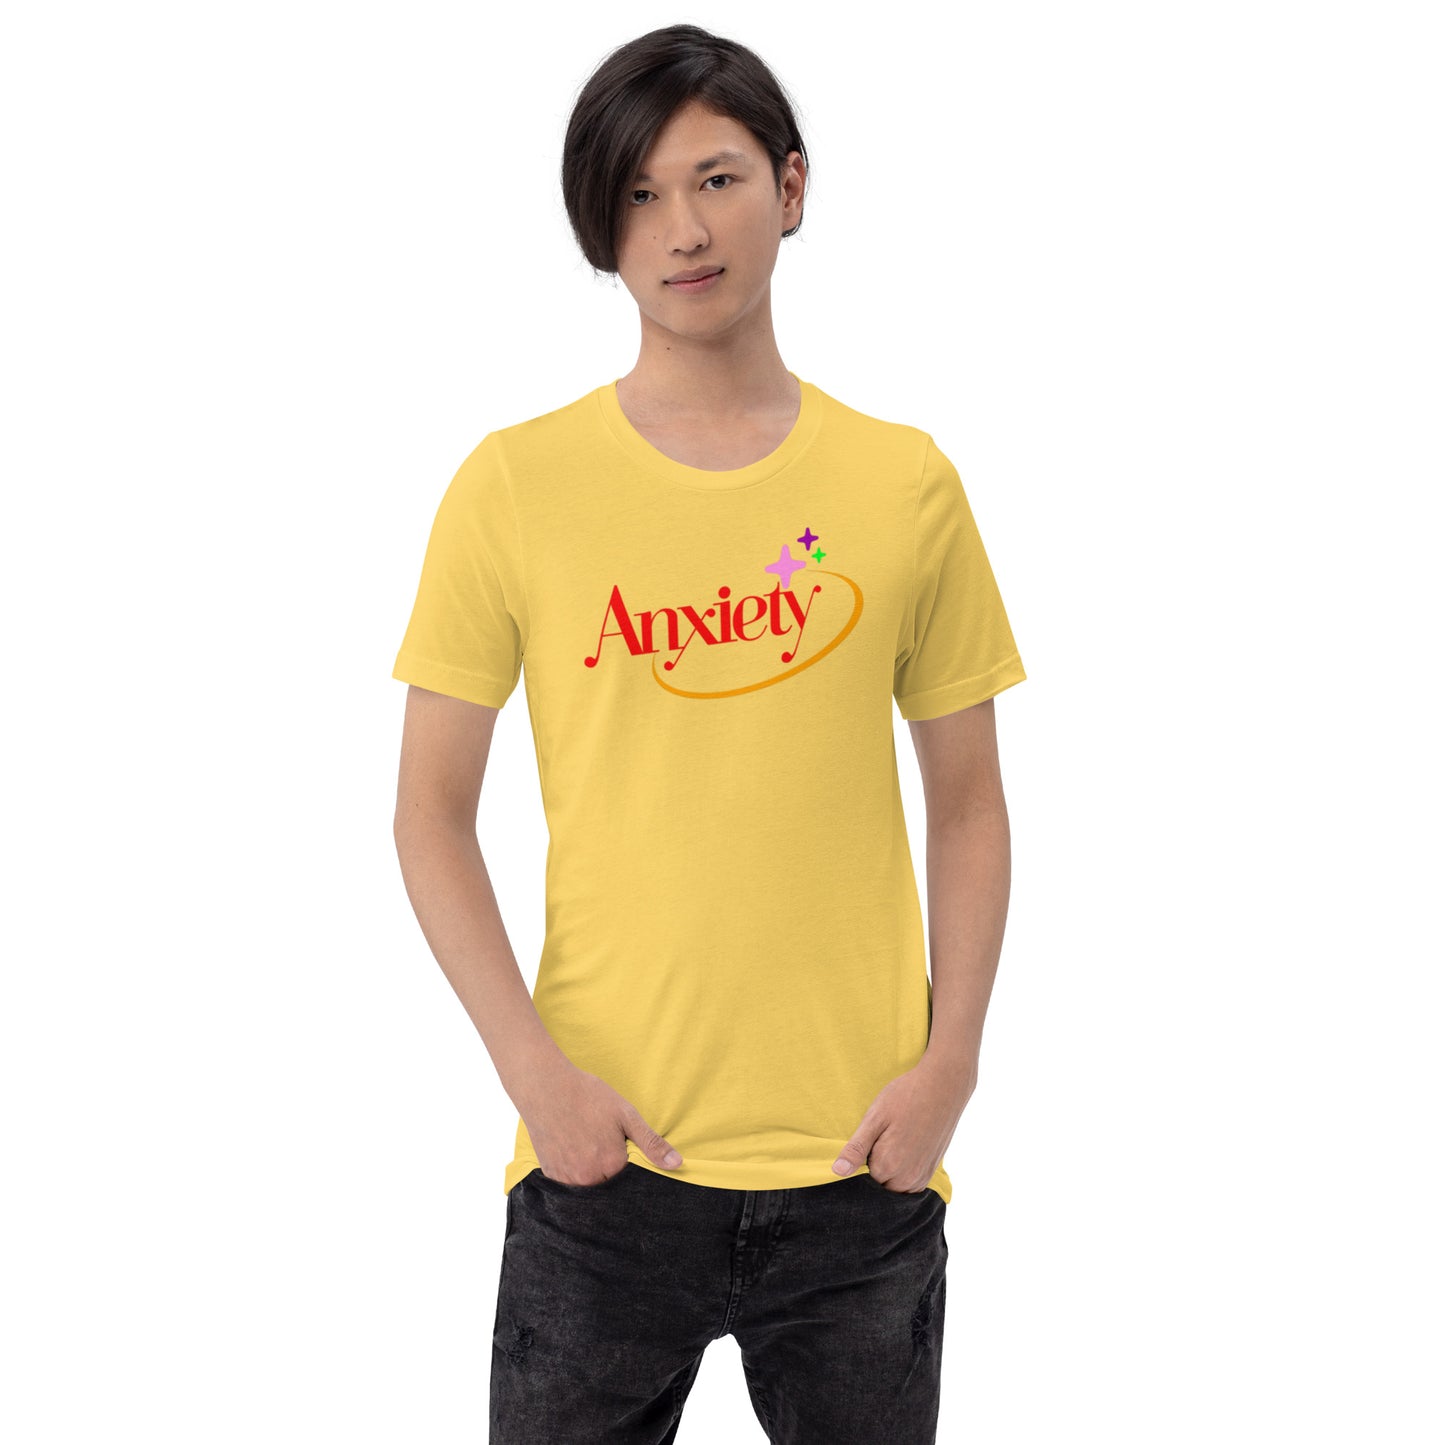 Anxiety Unisex t-shirt